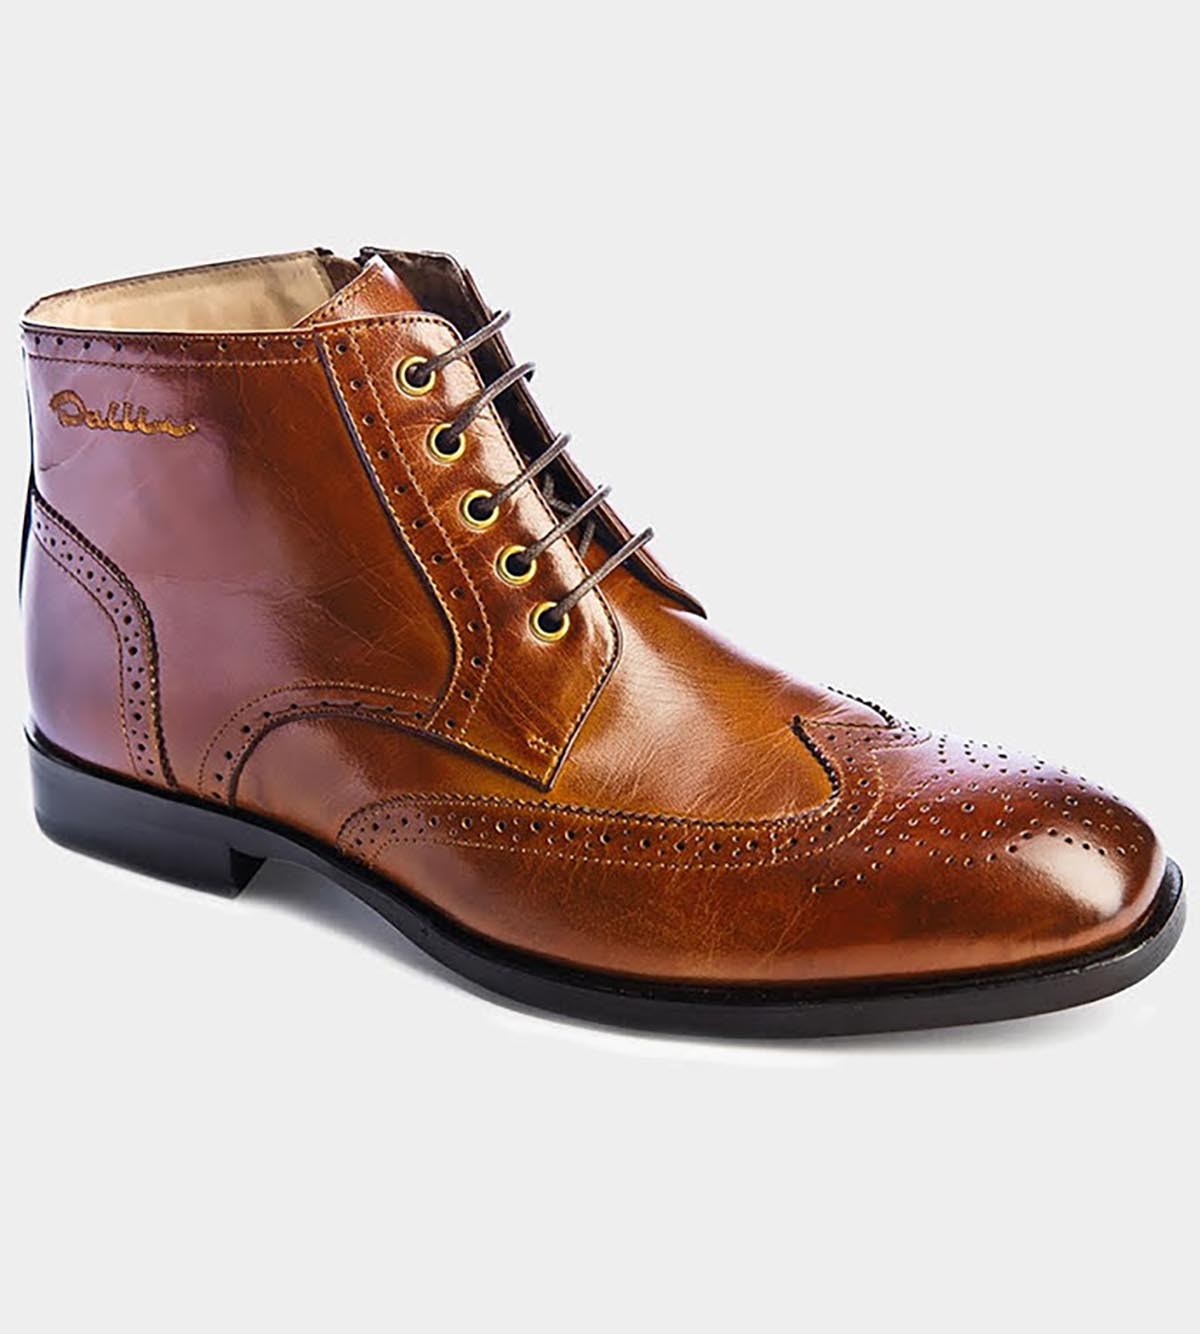 Hardy bruna boots